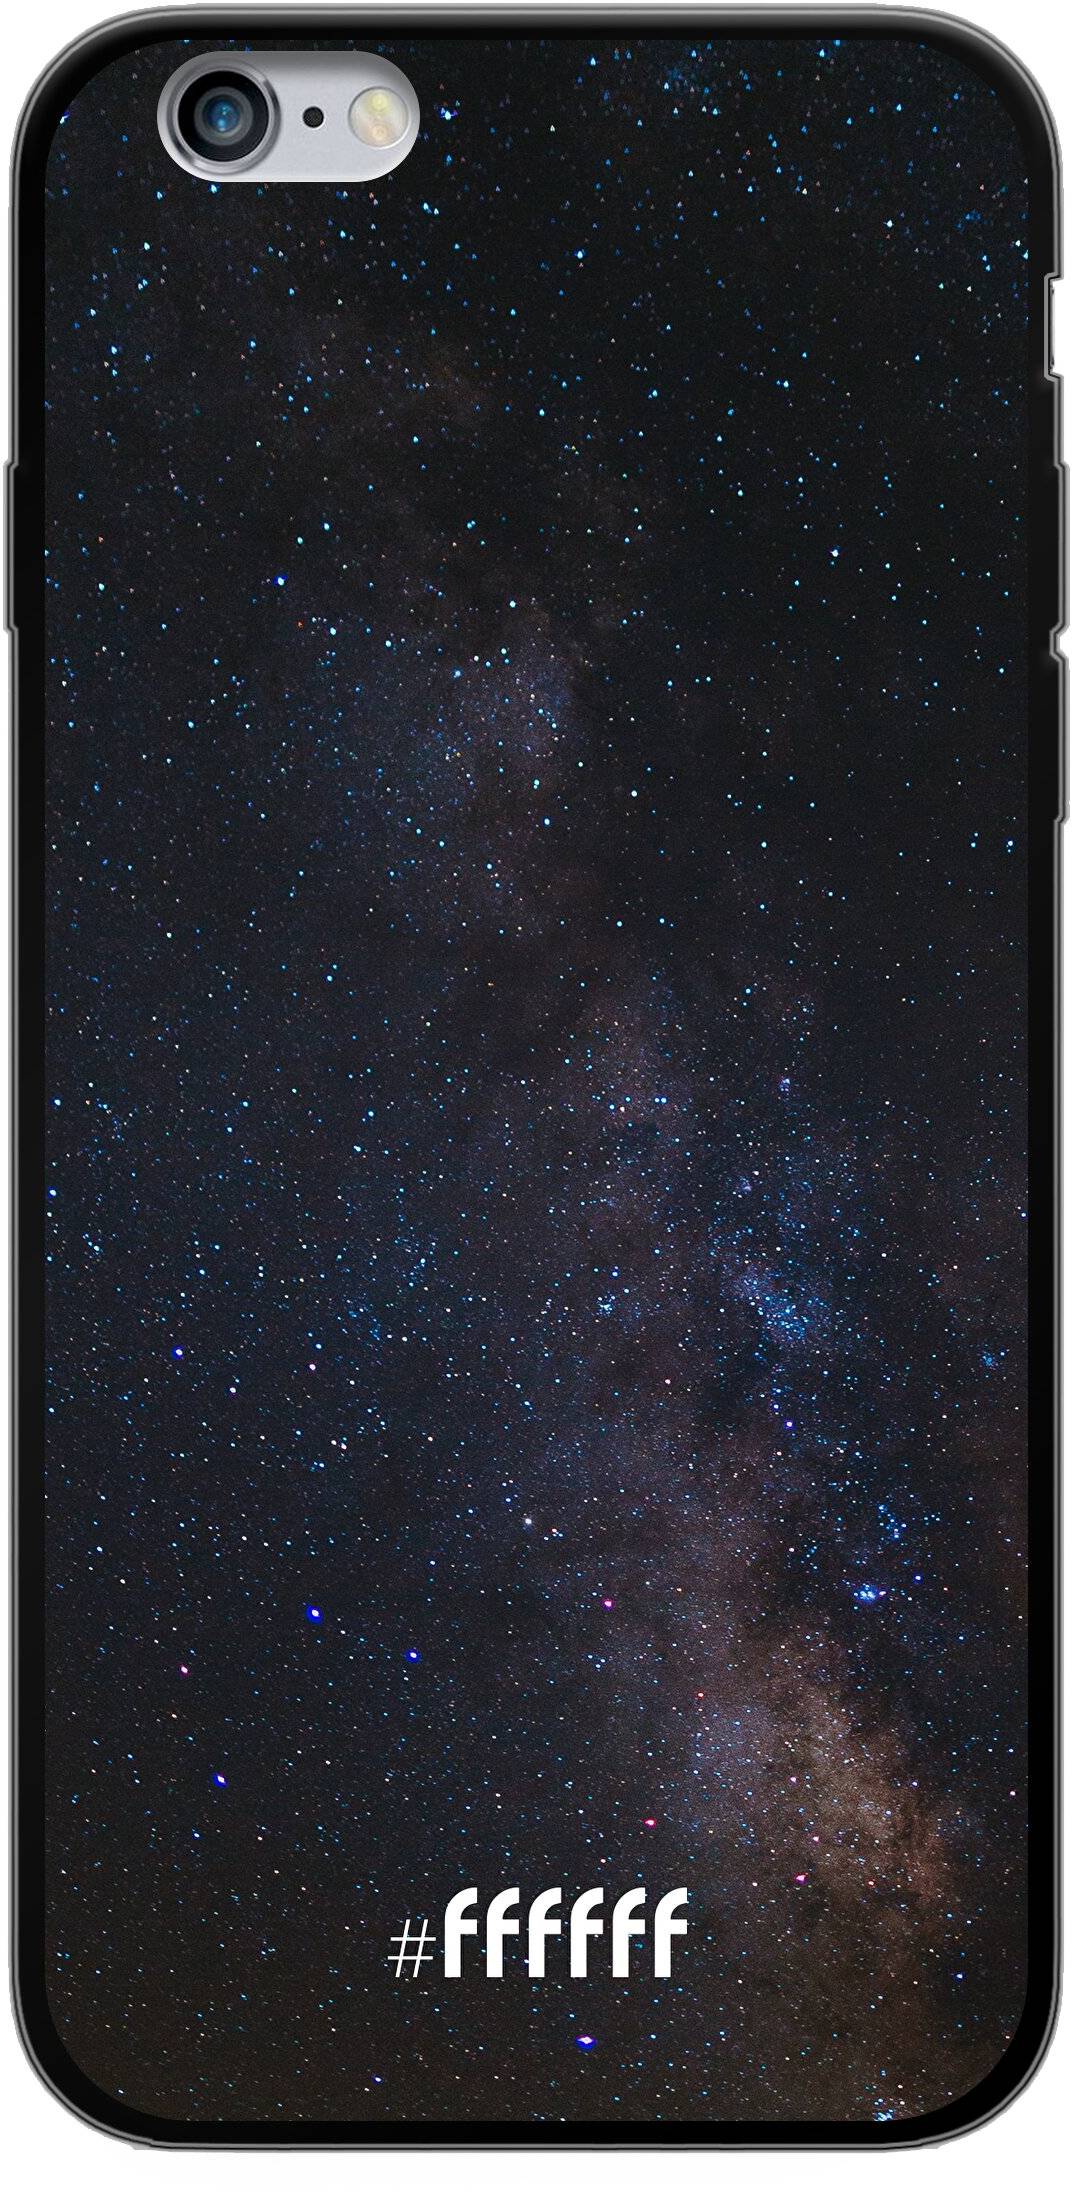 Dark Space iPhone 6s